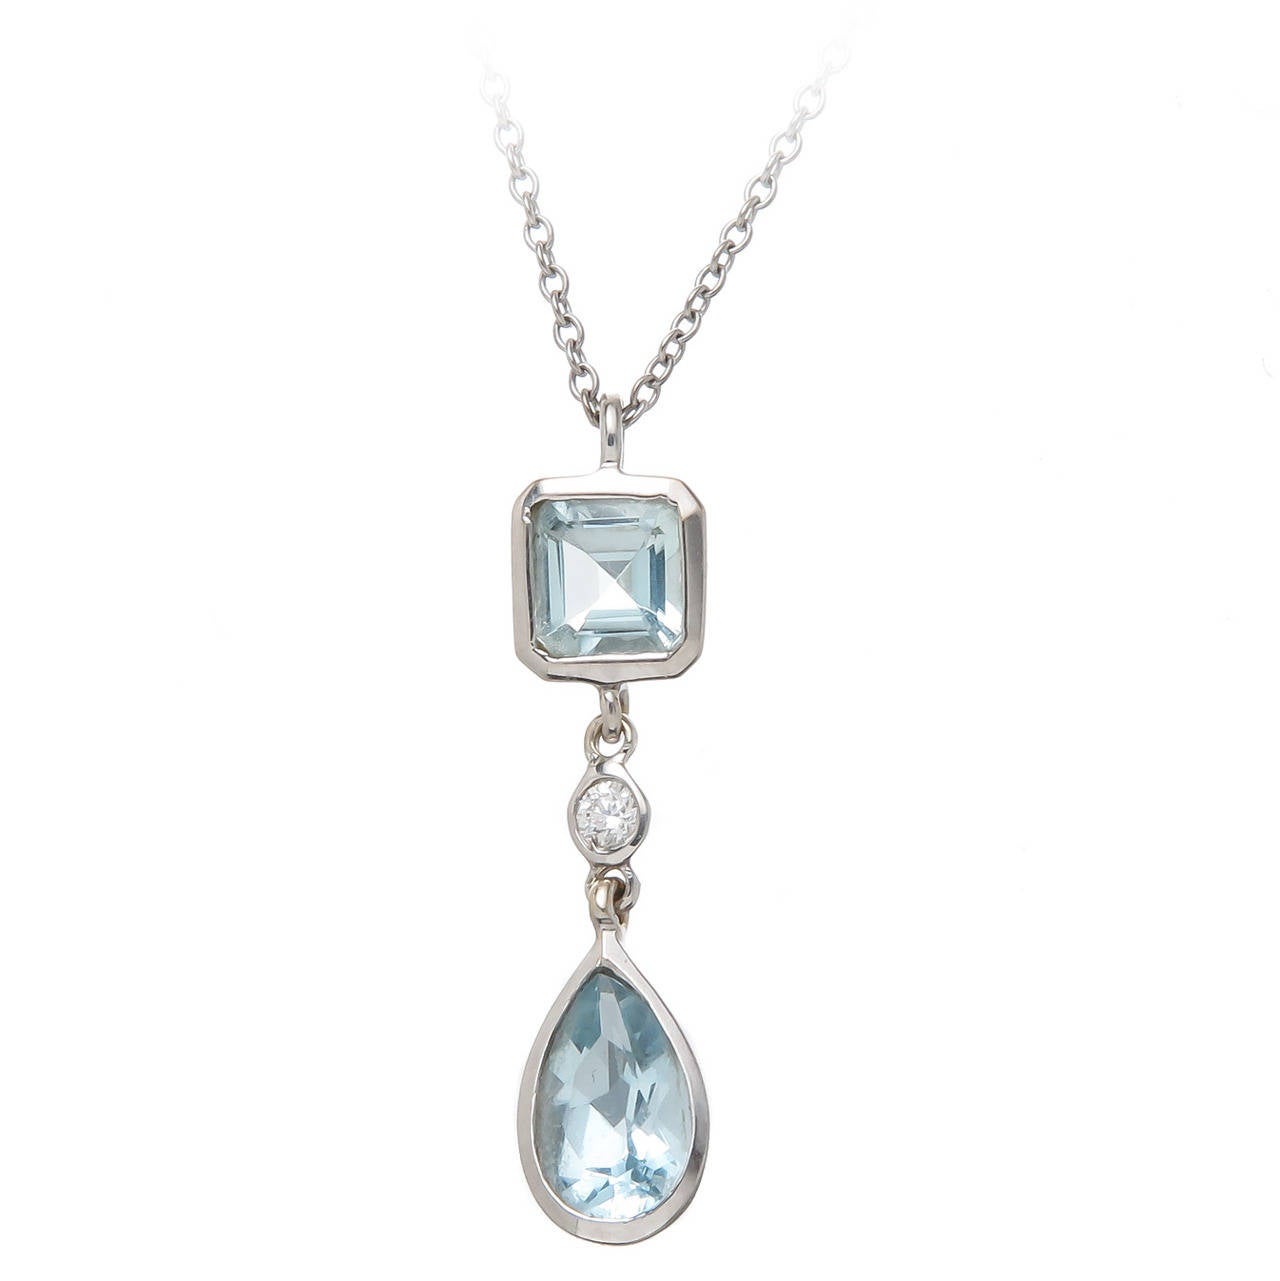 Tiffany & co. Elsa Peretti aquamarine necklace | Elsa peretti, Tiffany &  co., Aquamarine necklace